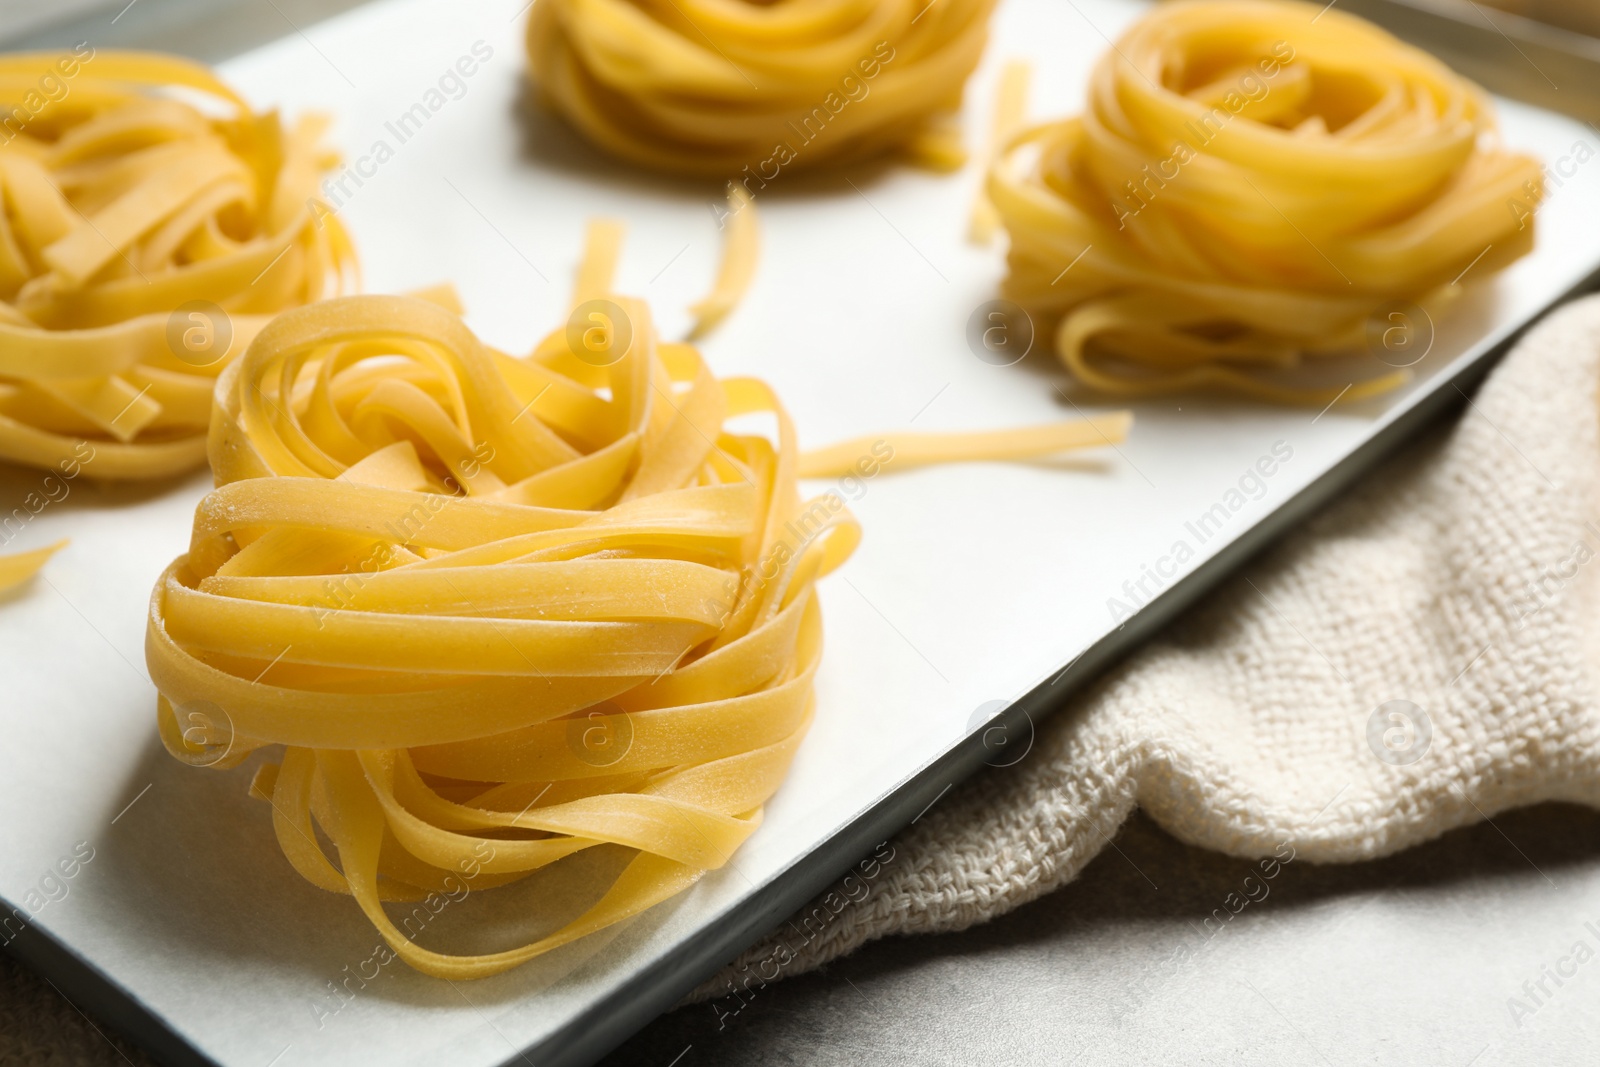 Photo of Raw tagliatelle pasta in baking pan, closeup view